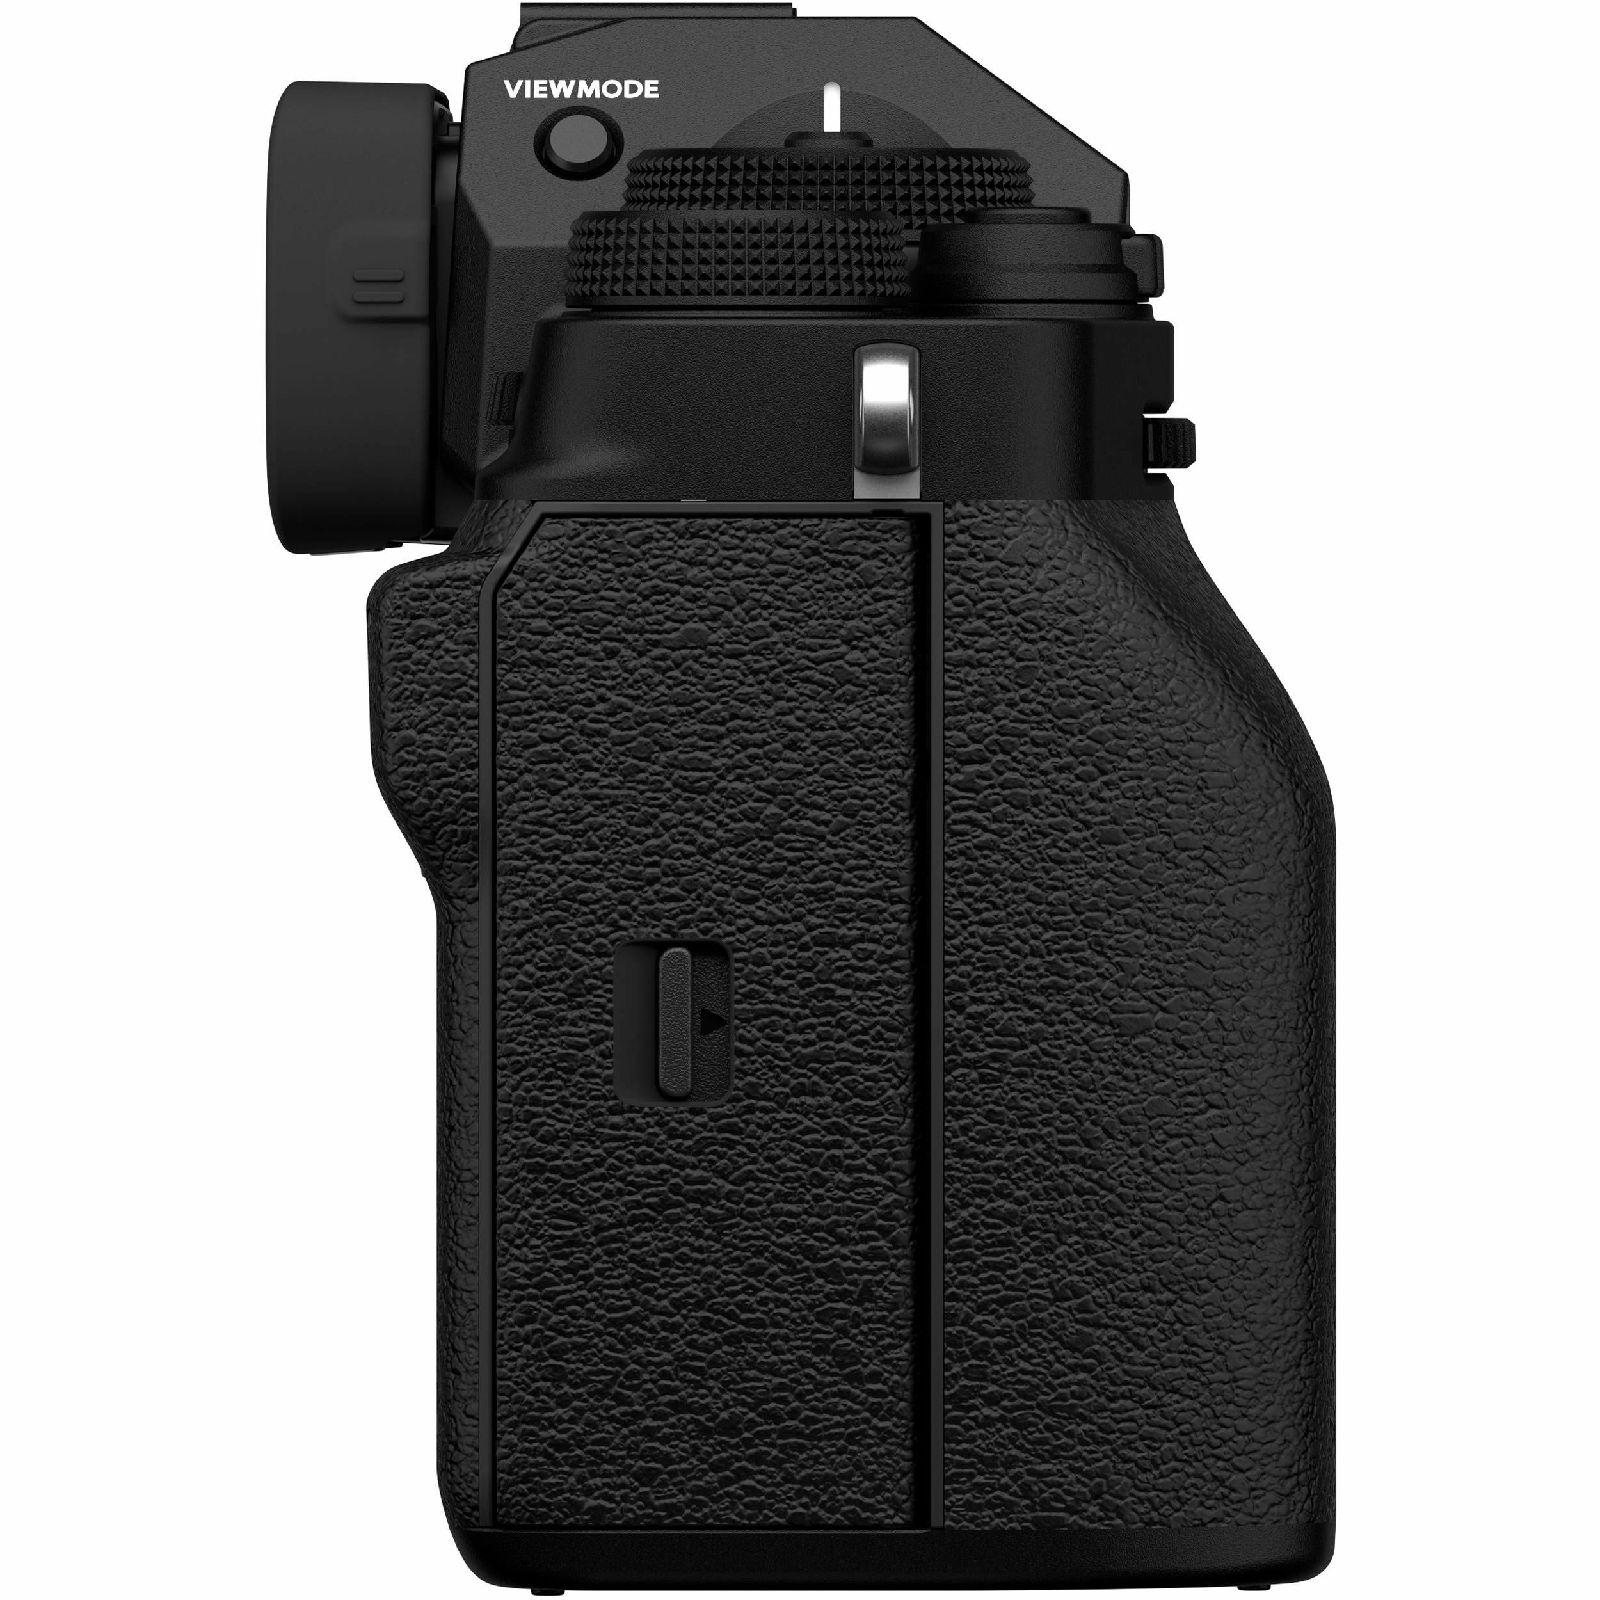 Fujifilm X-T4 Body Black crni Fuji digitalni fotoaparat Mirrorless camera (16650467)